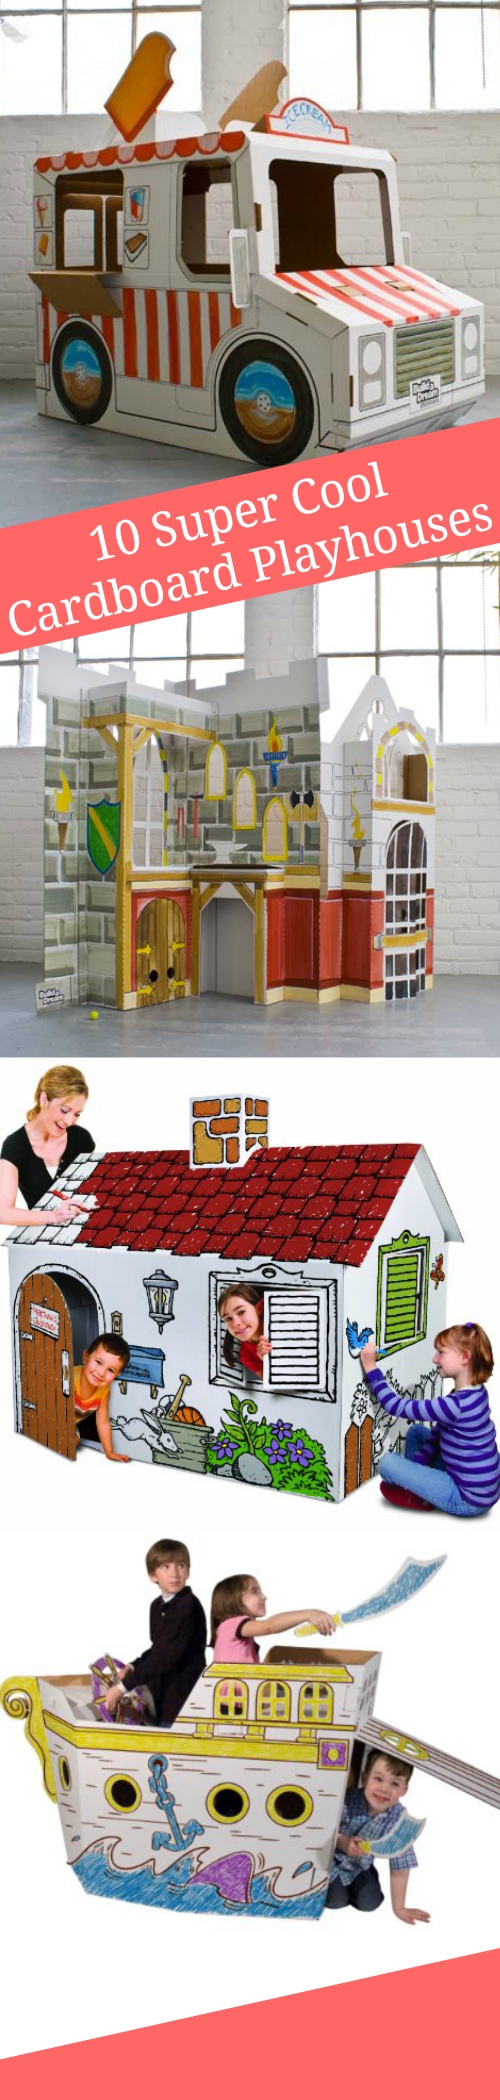 10 Super Cool Cardboard Playhouses